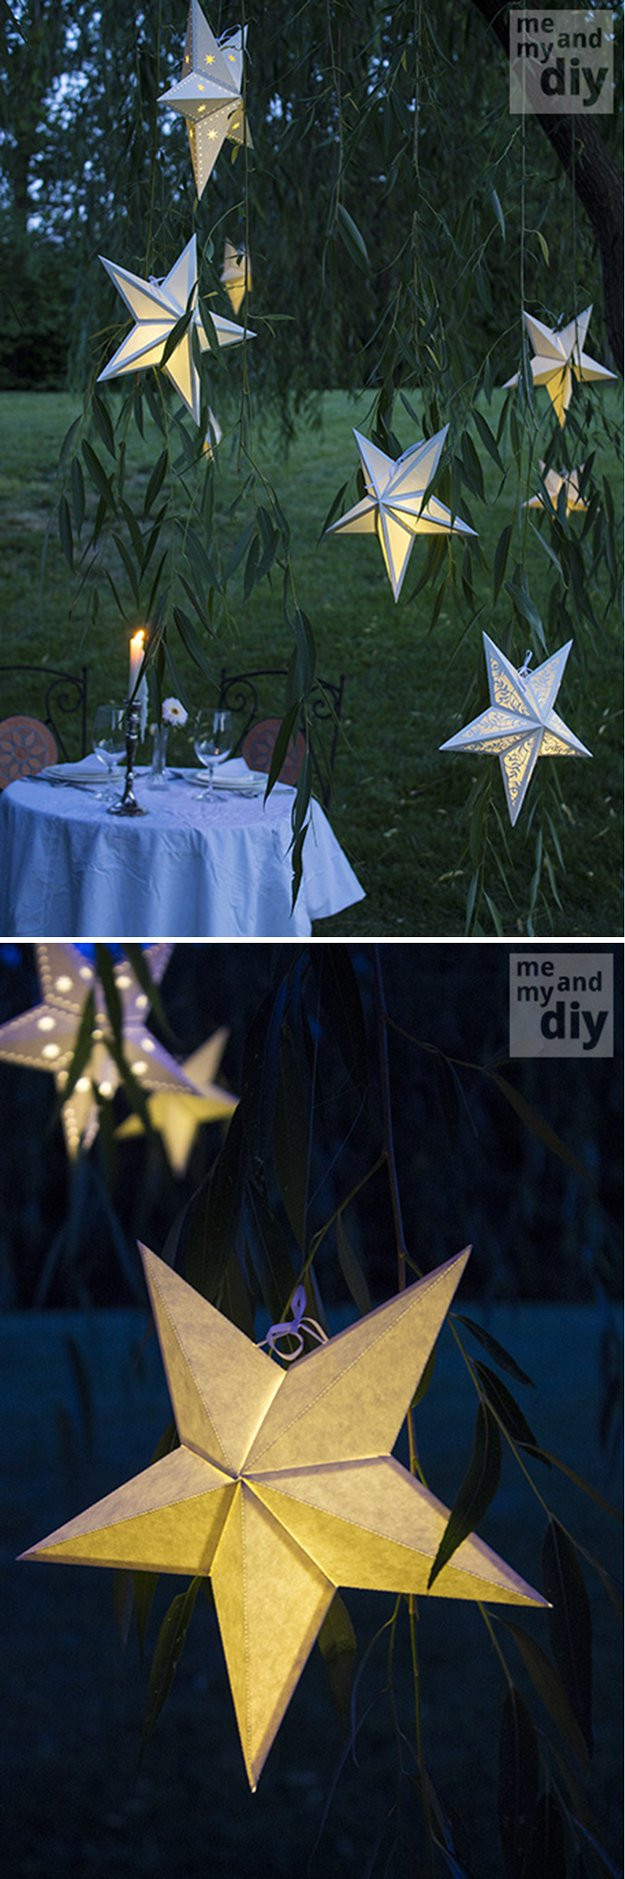 DIY Outdoor Lanterns
 DIY Outdoor Lantern Ideas to Make At Home